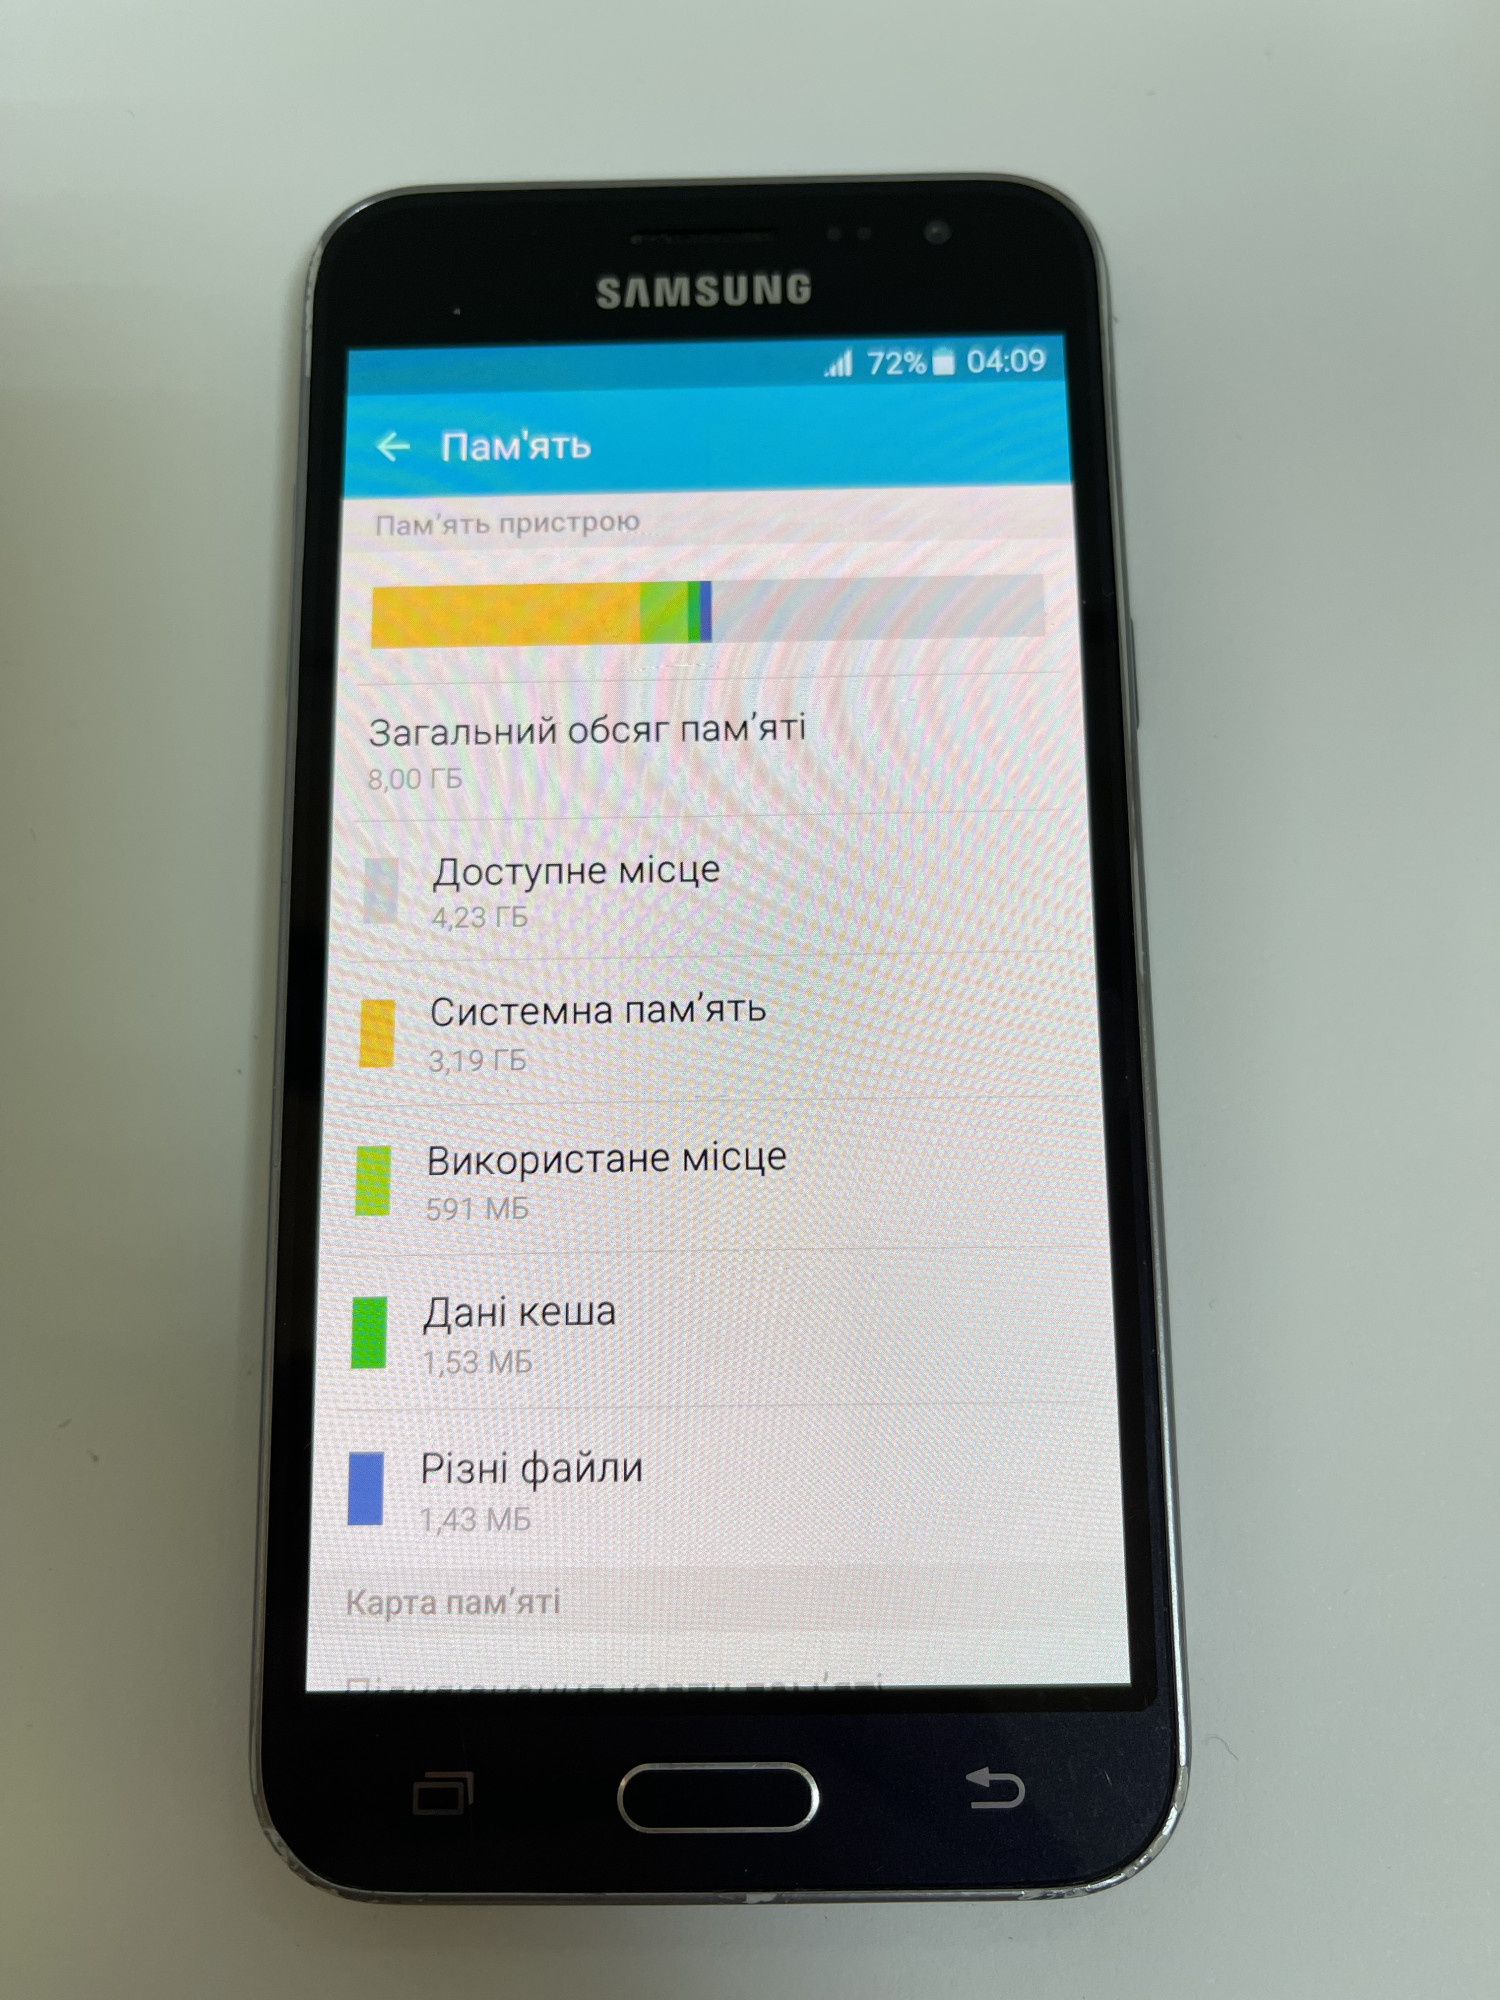 Samsung Galaxy J3 2016 Black (SM-J320HZKD) 1/8Gb 8